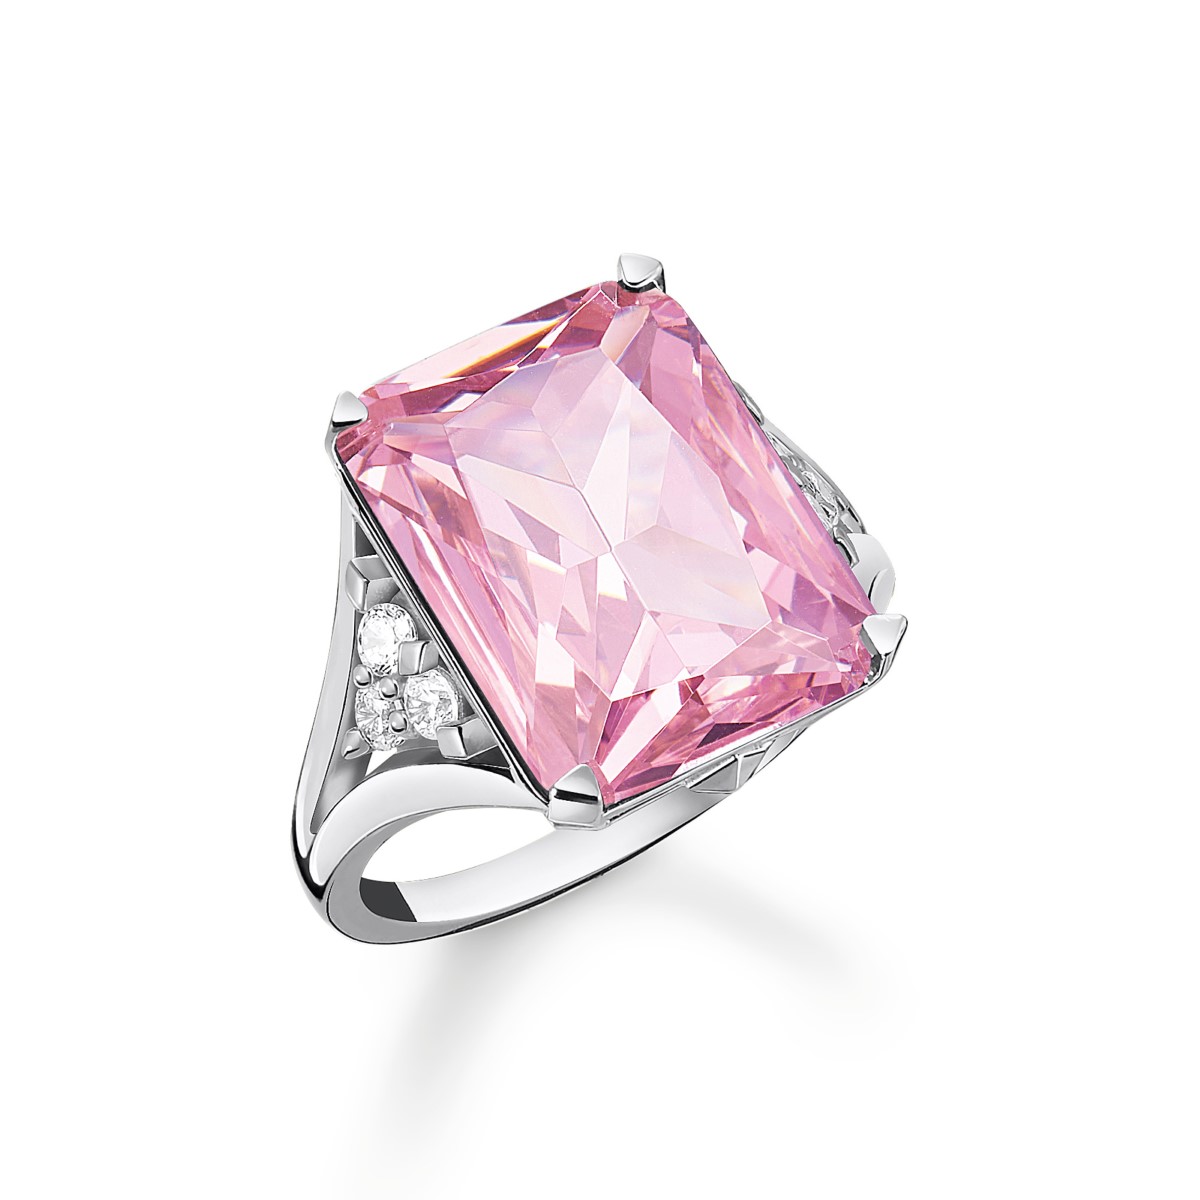 Thomas Sabo Pink Large Octagon Cut Silver Ring